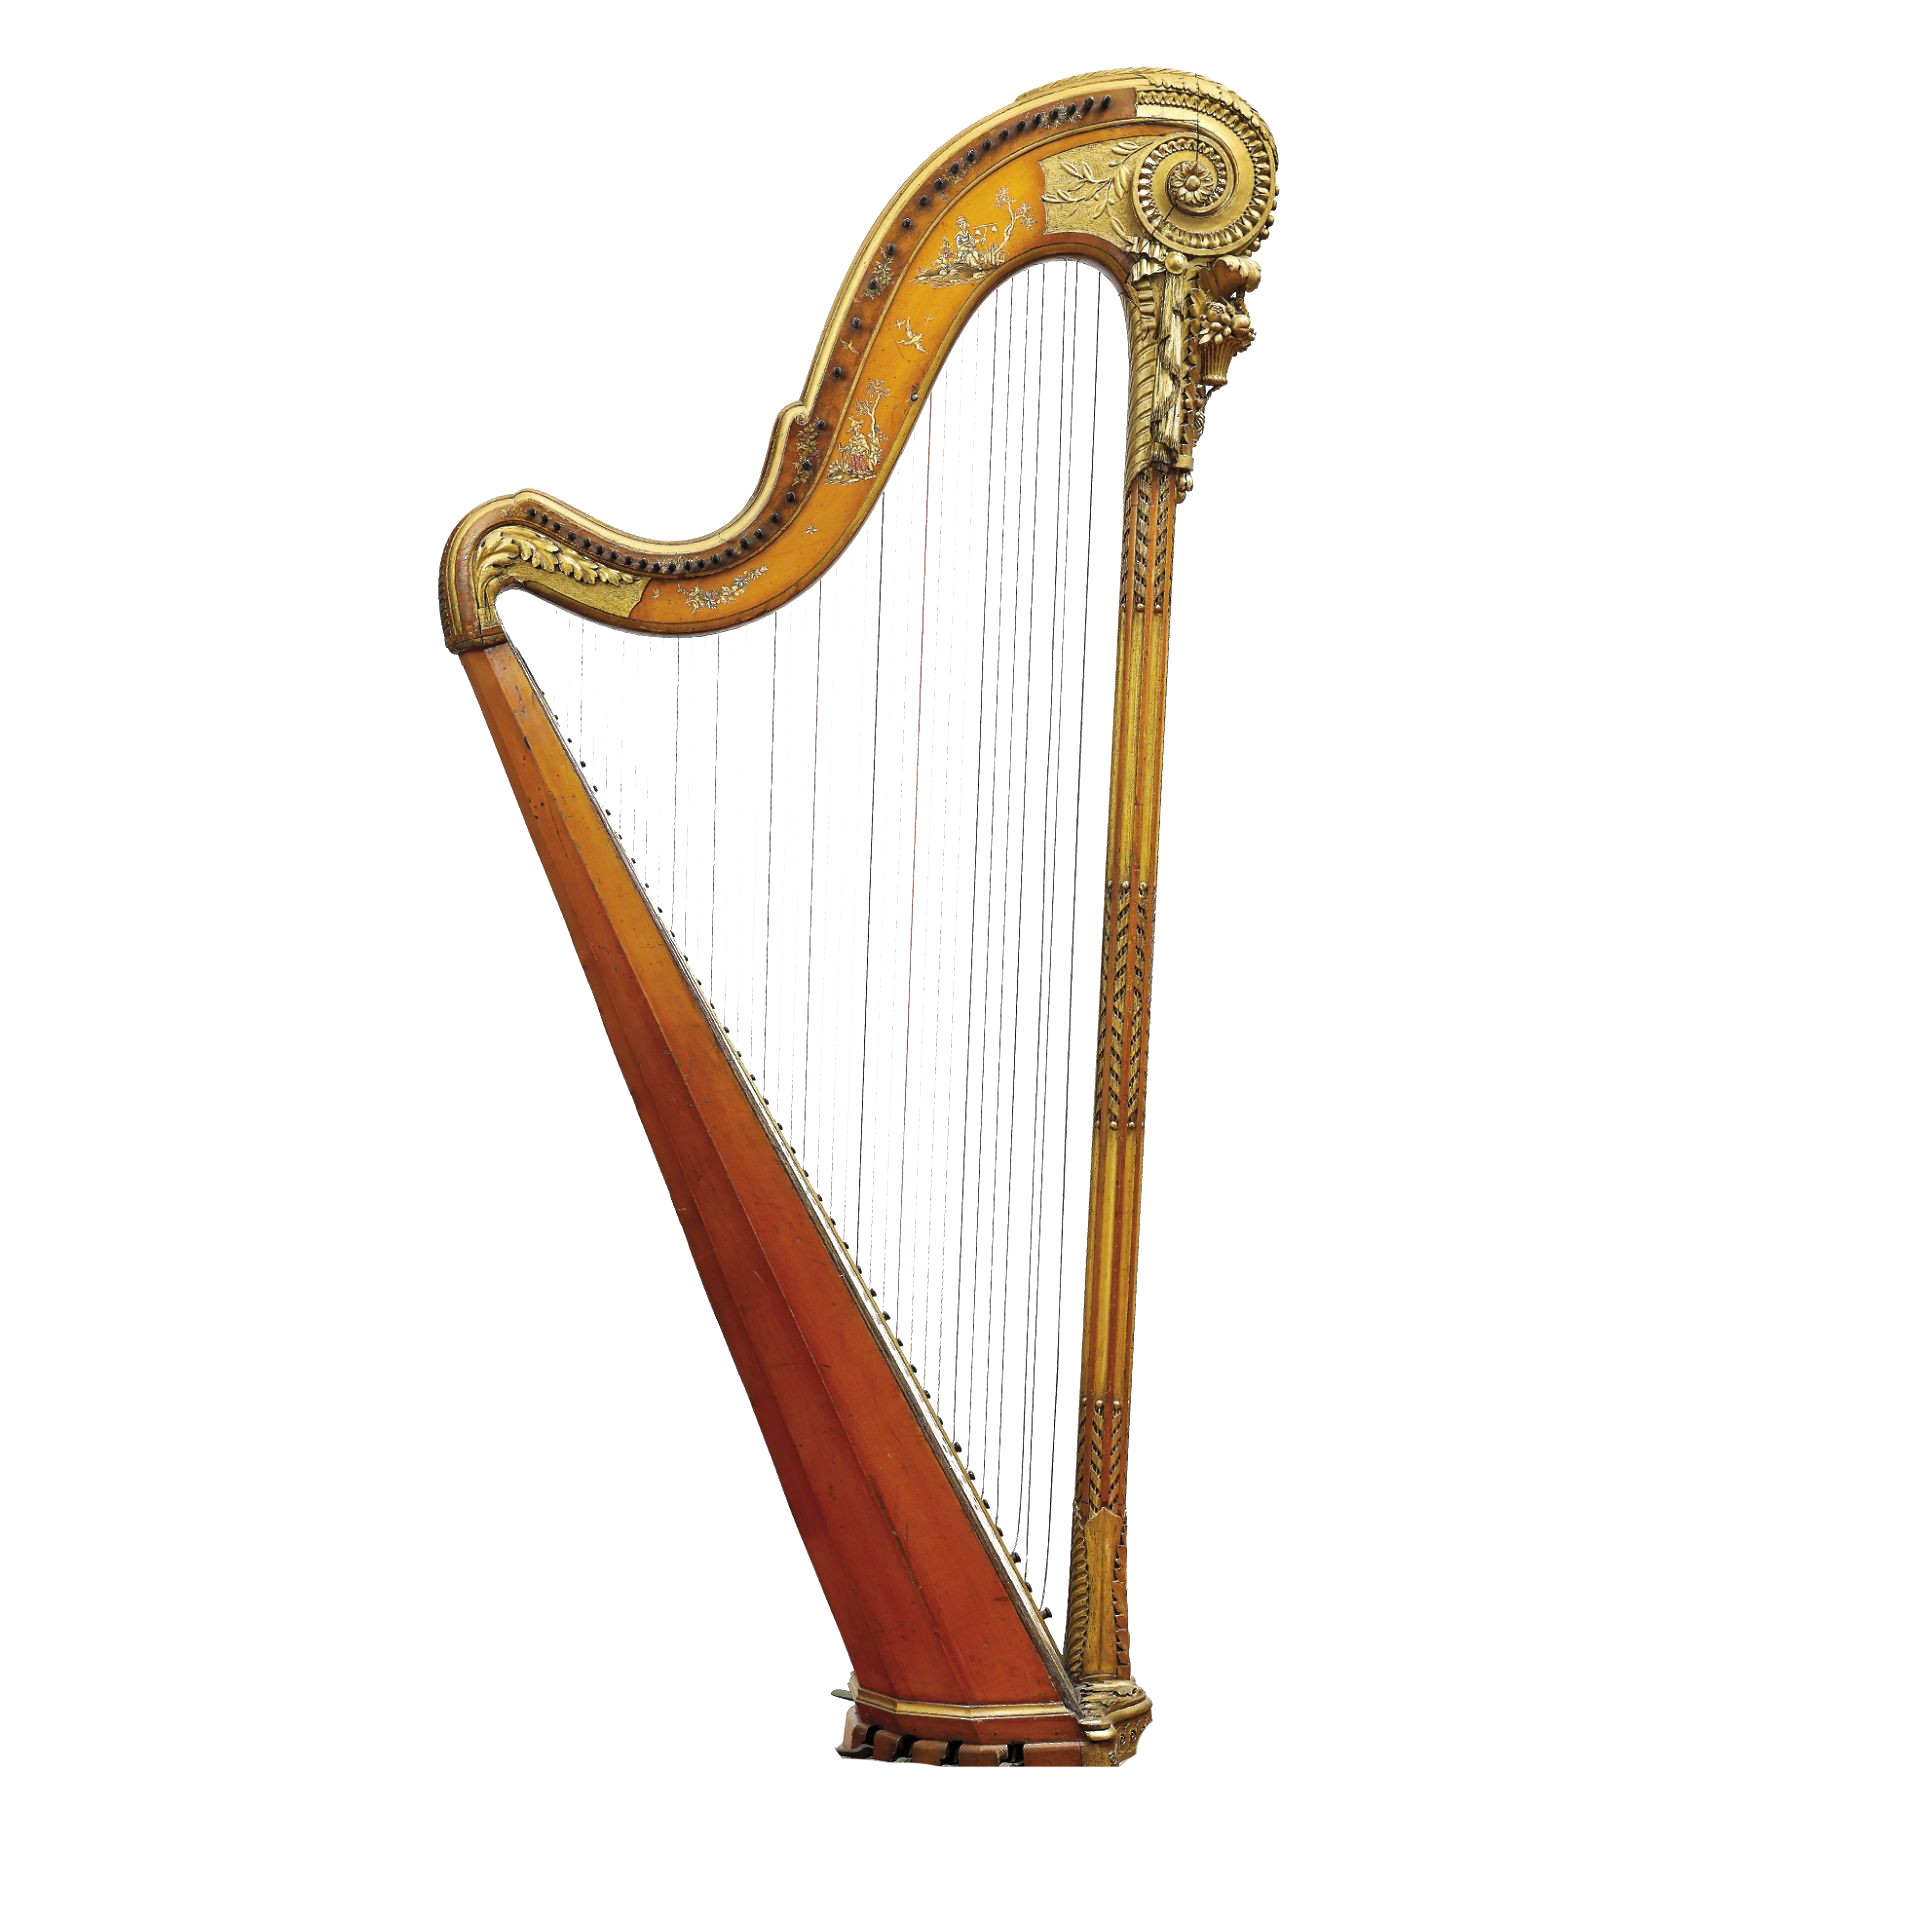 Petite harpe portable PNG image image